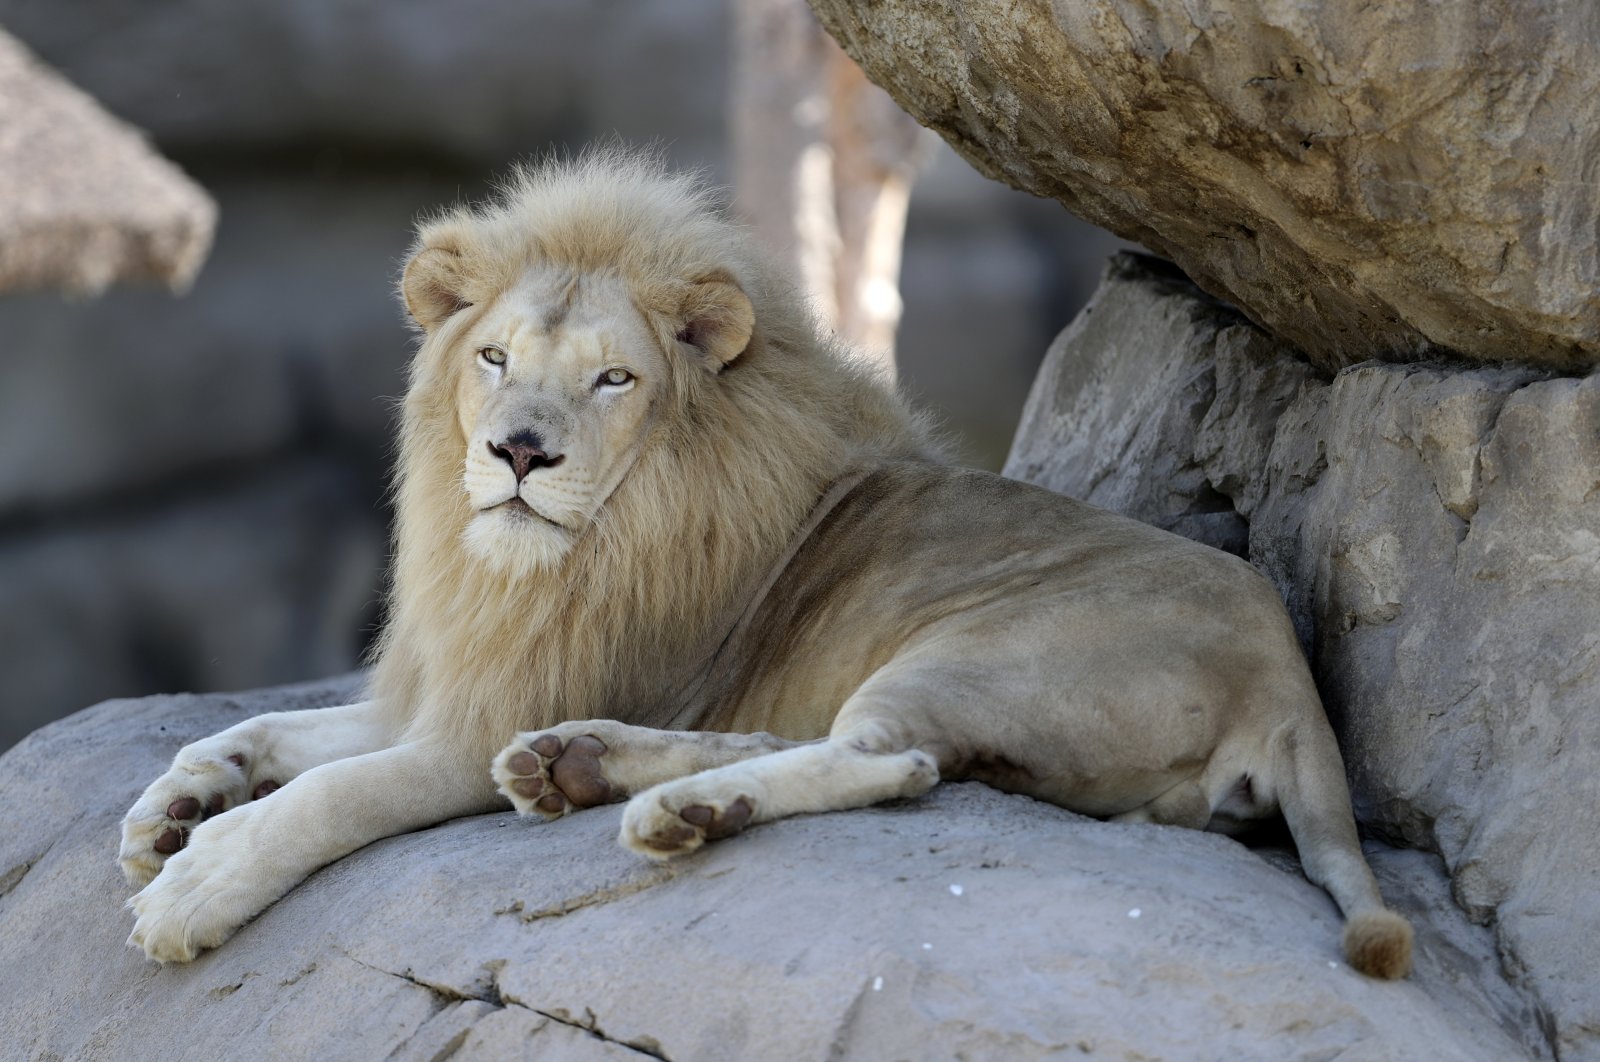 African lion, Alex, looks out from its enclosure at the Dubai Safari Park in Dubai, United Arab Emirates, Oct. 15, 2020. (AP Photo)